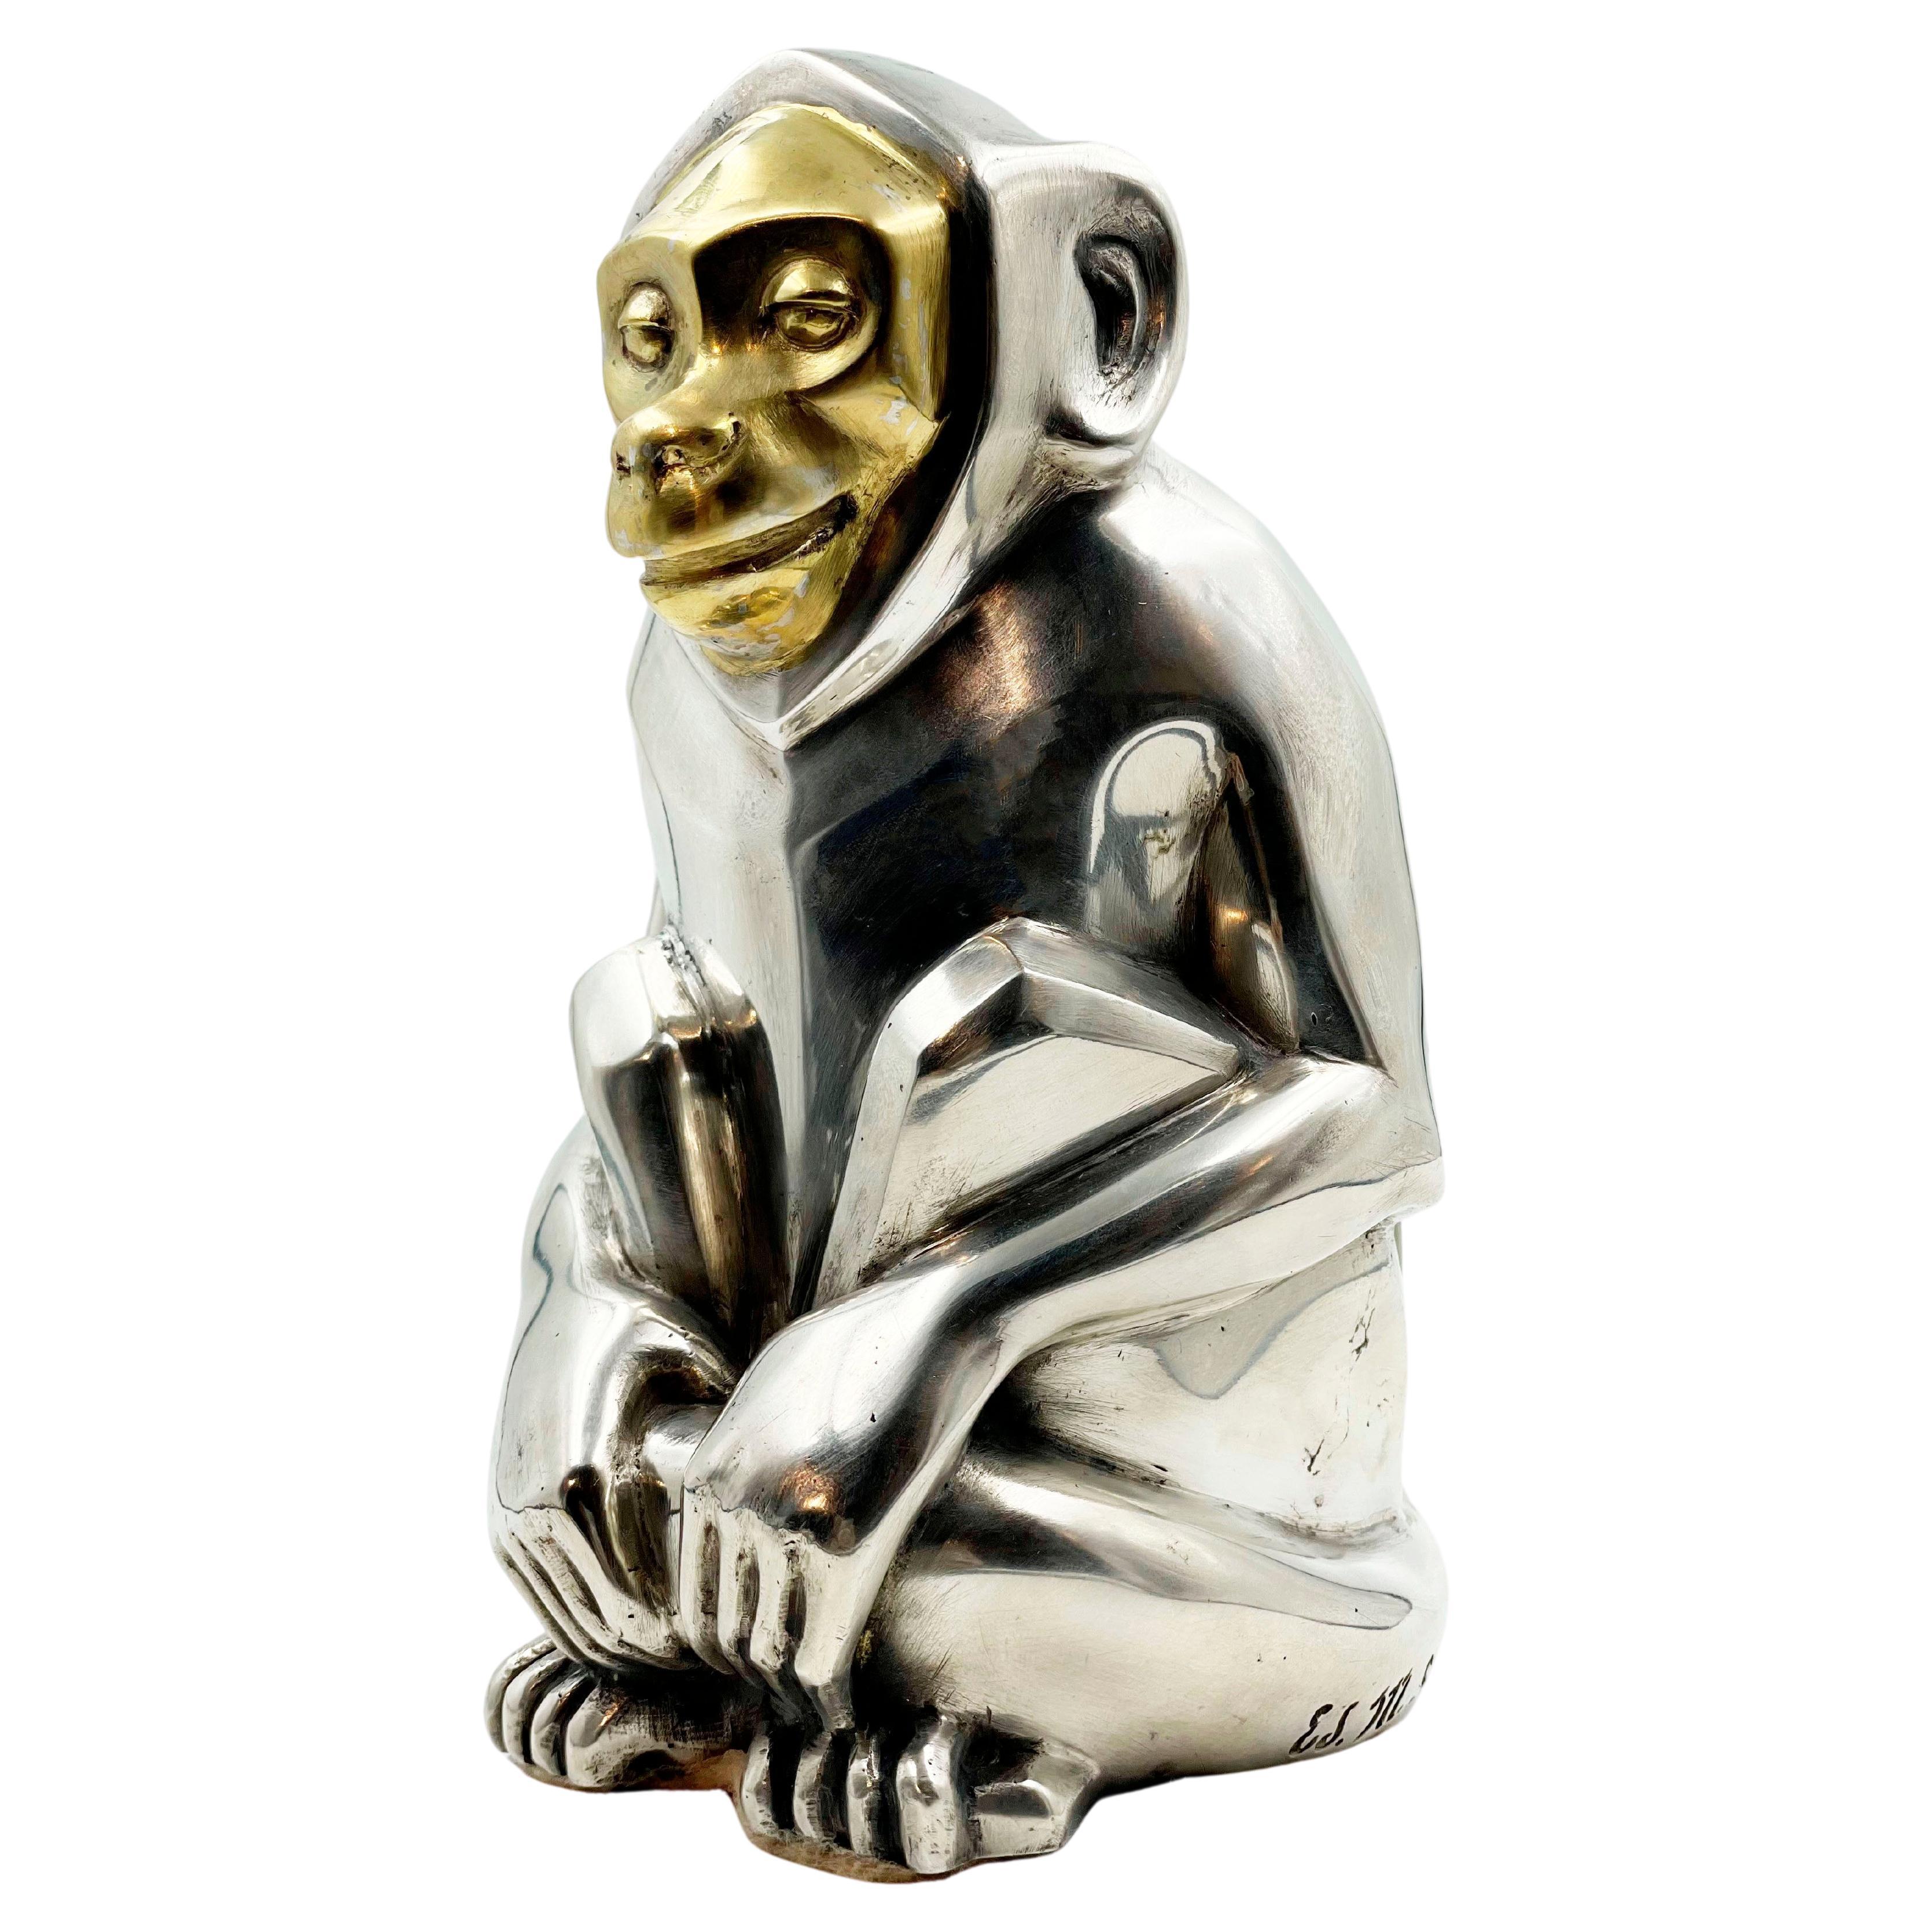 Bronze Edouard Marcel SANDOZ 1930  "Seated monkey"